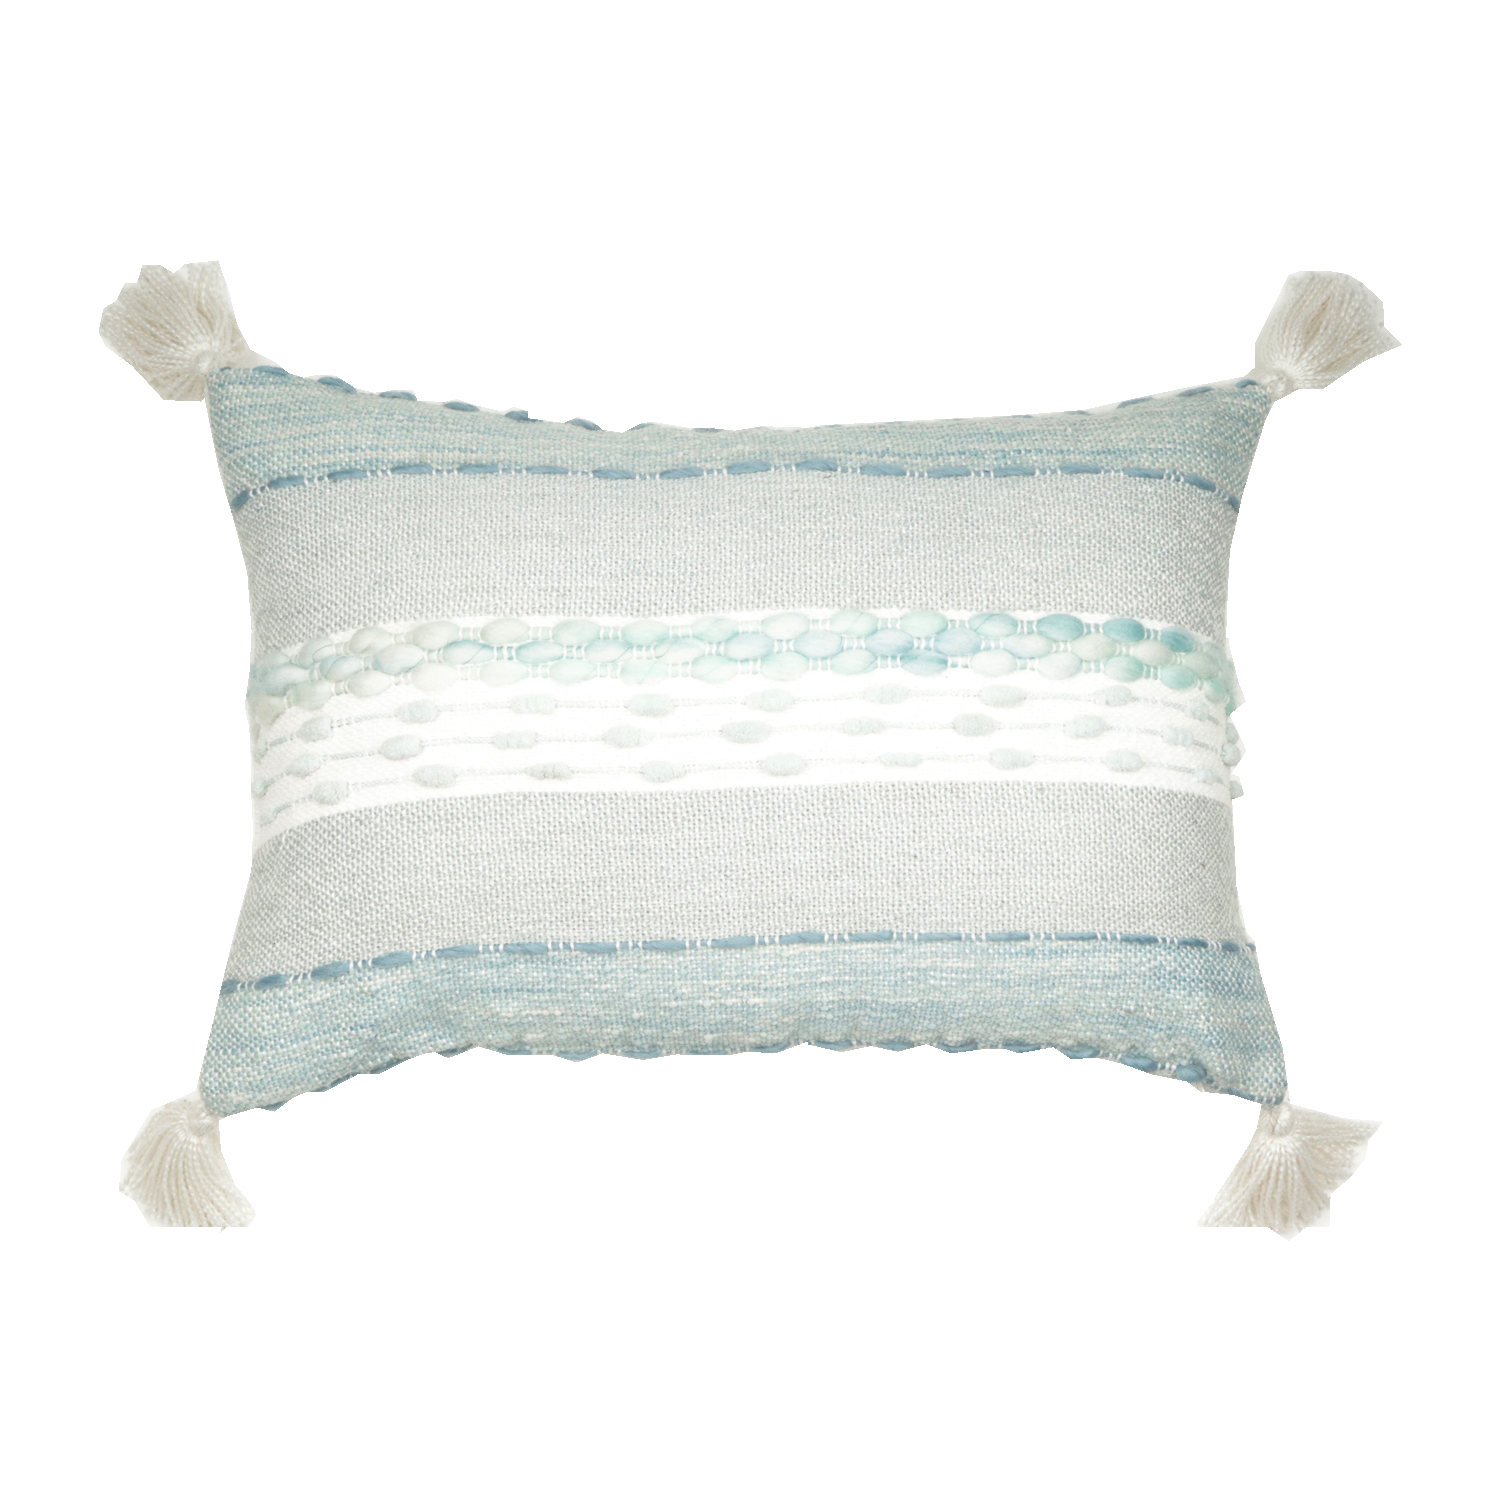 Woven Cushion With Tassels Nautical Blue 60x40cm Gift